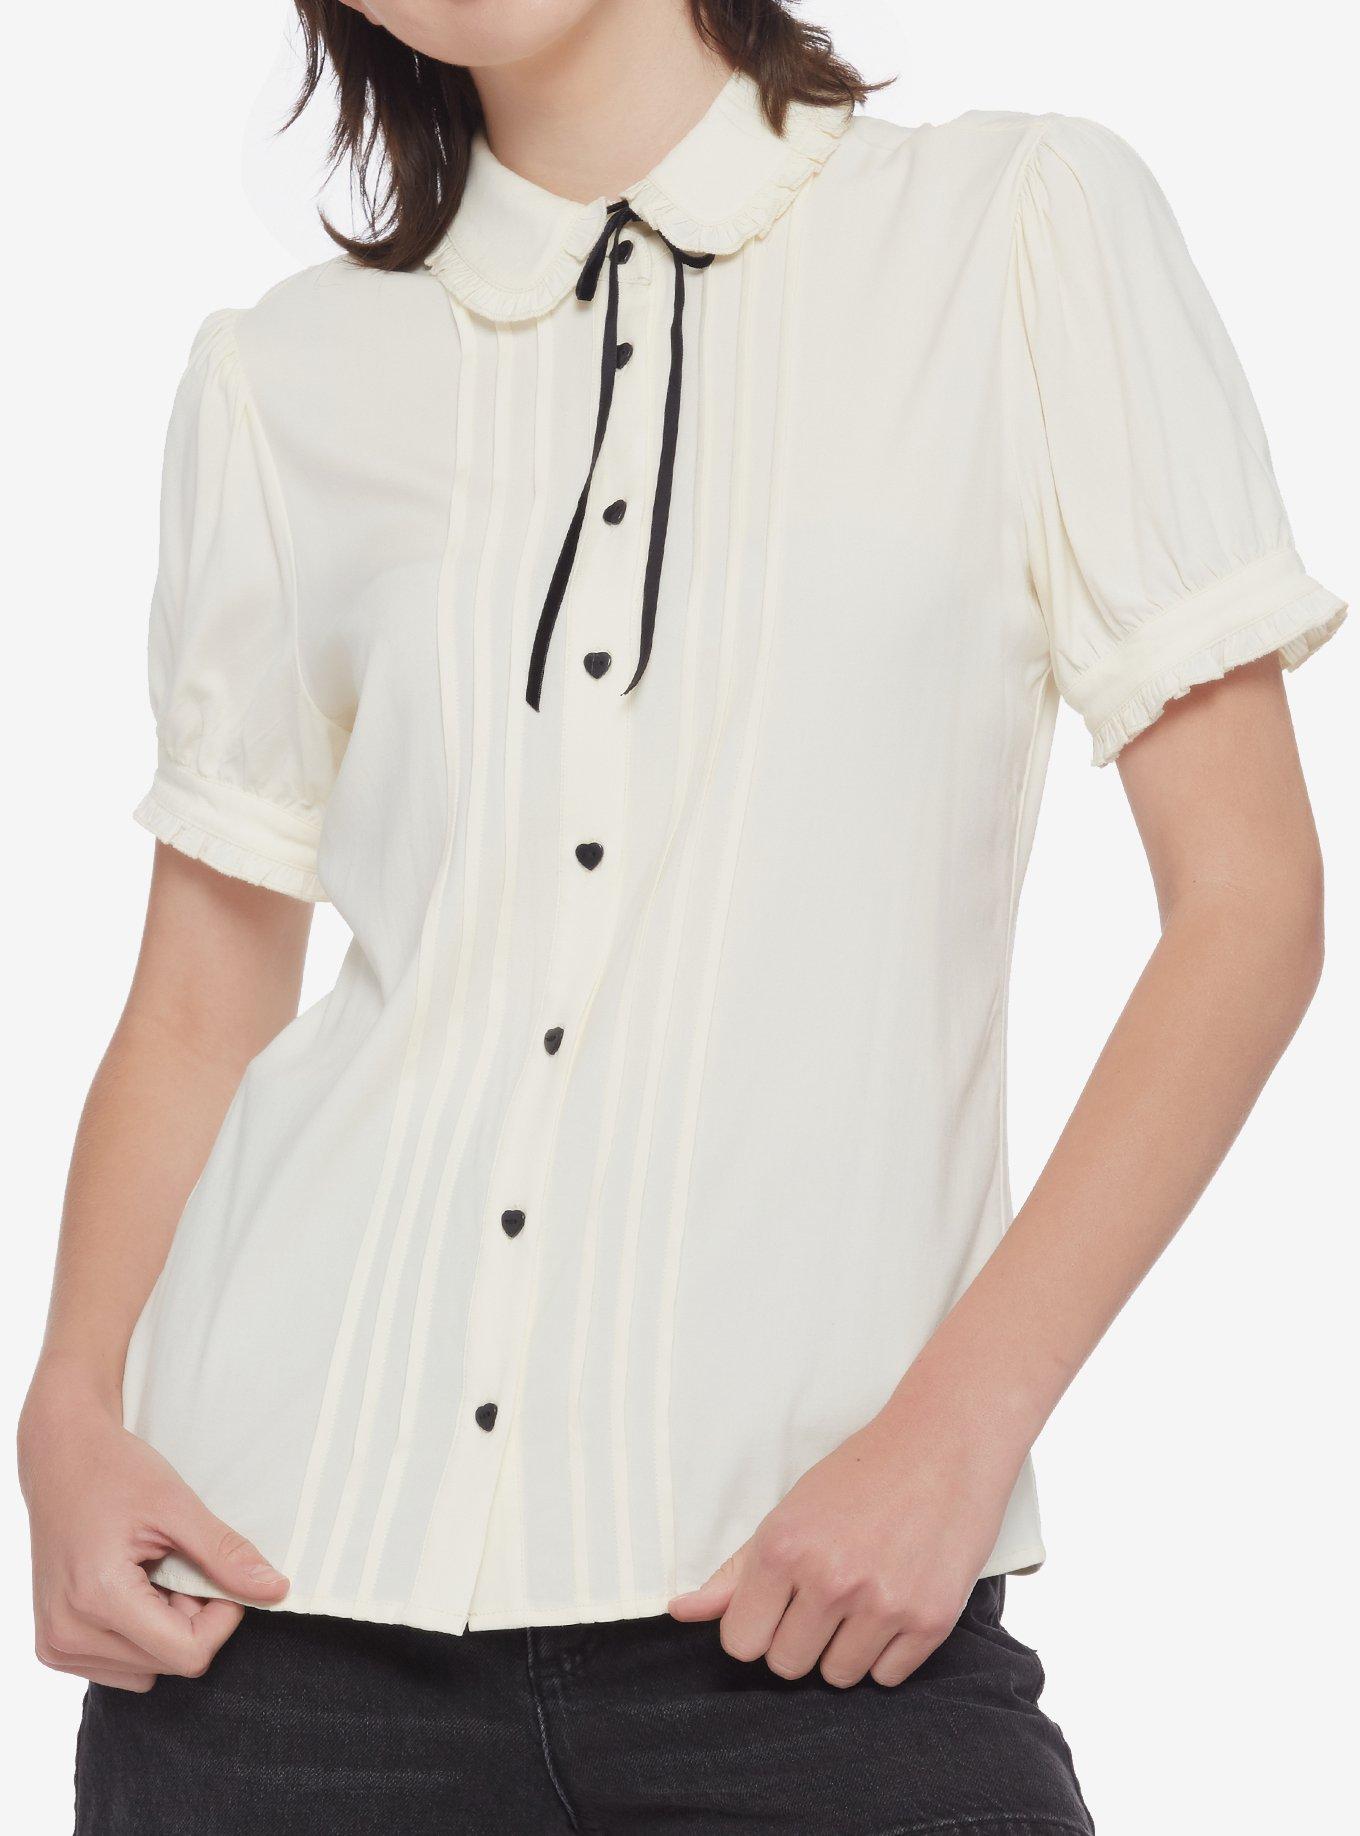 12 Short Sleeve Button-Up Shirts for Summer - Fashion Jackson